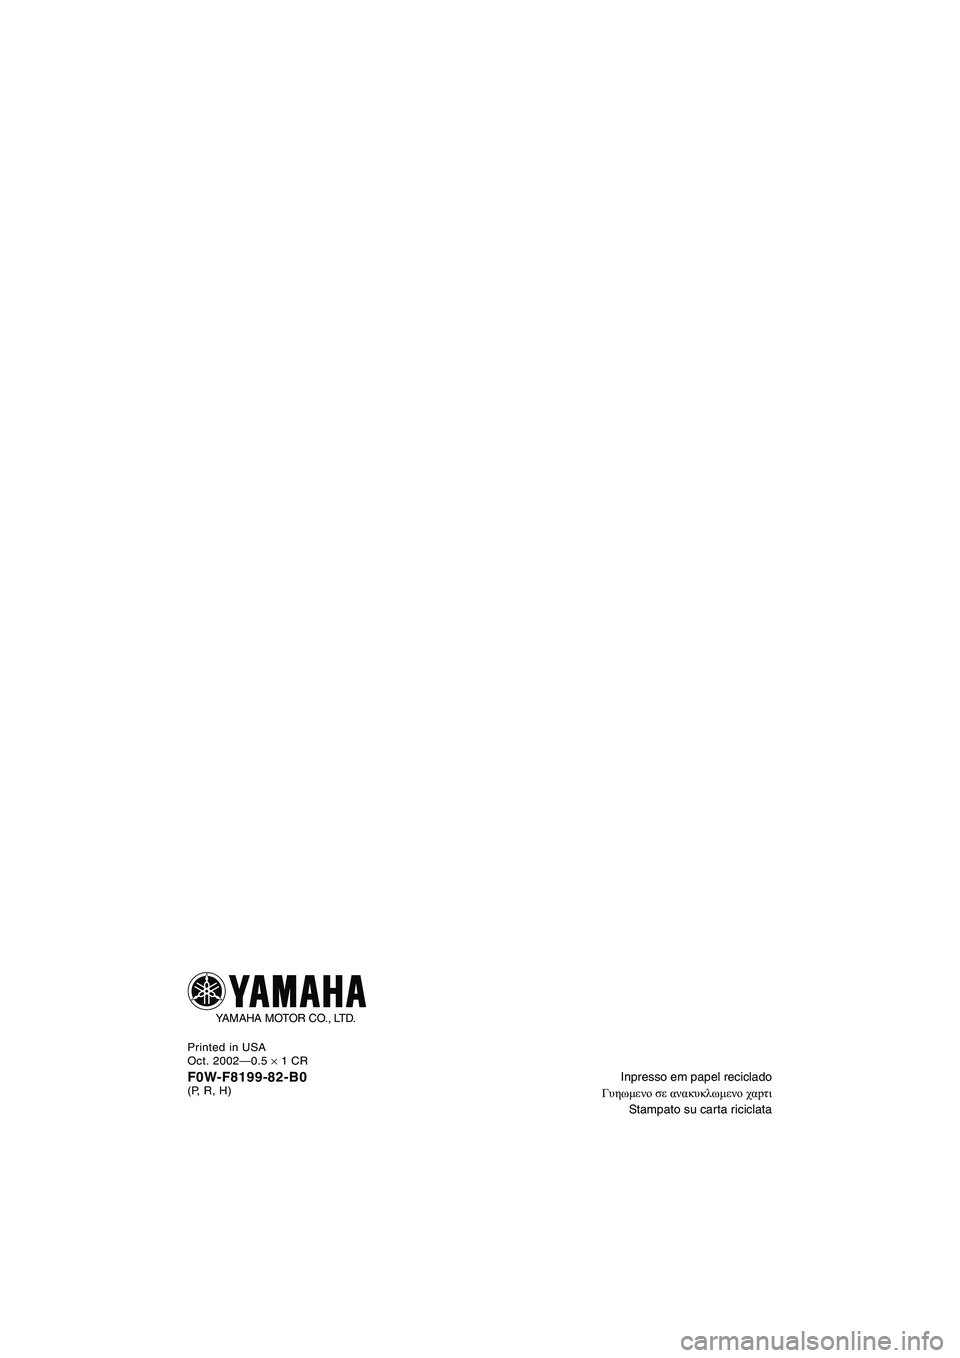 YAMAHA GP800R 2003  Manuale duso (in Italian) Inpresso em papel reciclado
Γυηωμενο σε ανακυκλωμενο χαpτι
Stampato su carta riciclata
Printed in USA
Oct. 2002—0.5 
× 1 CR
F0W-F8199-82-B0(P, R, H)
YAMAHA MOTOR CO., LTD.